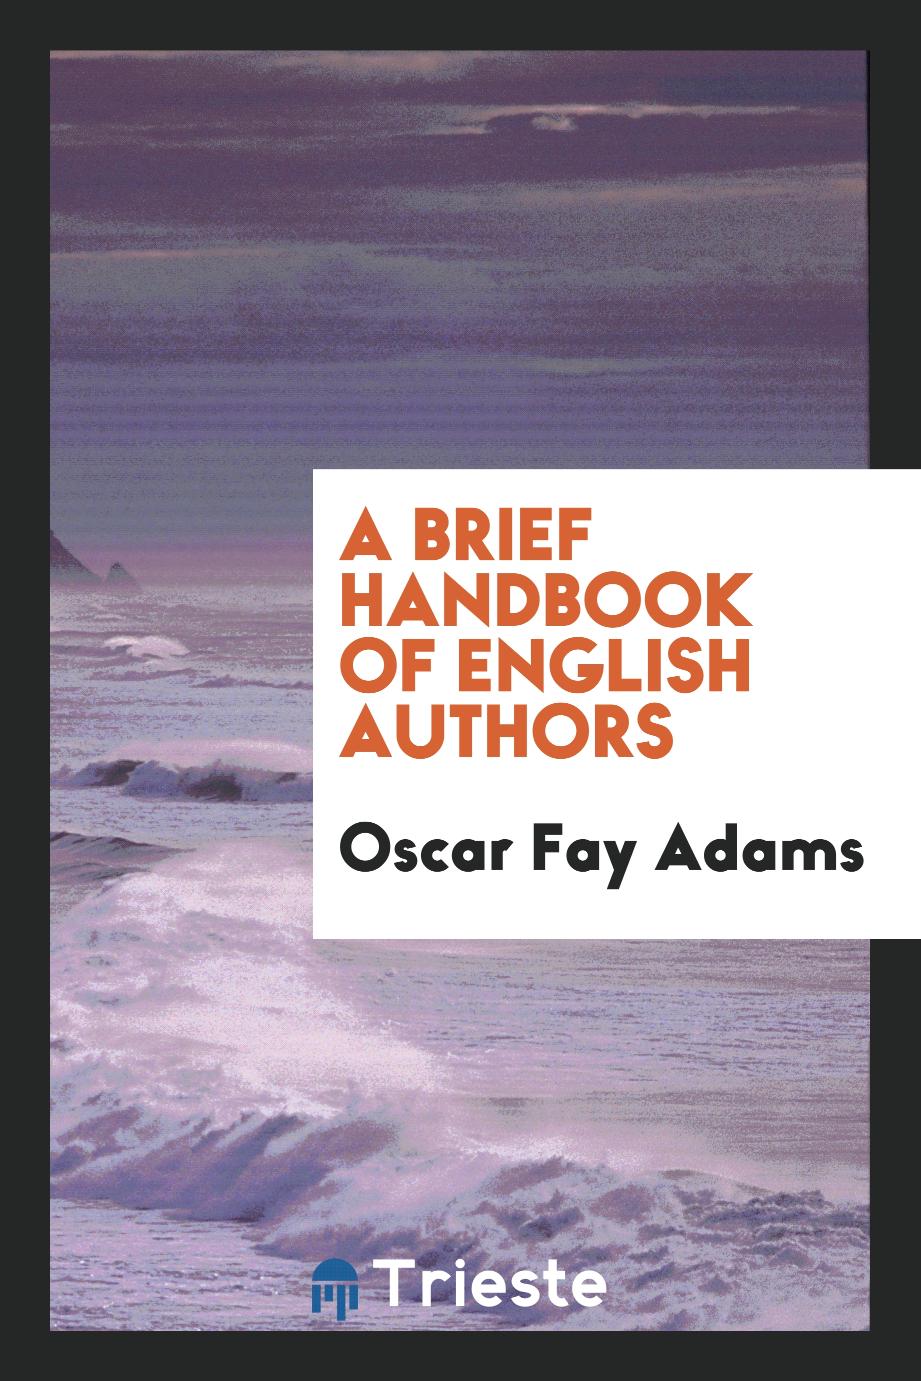 A brief handbook of English authors